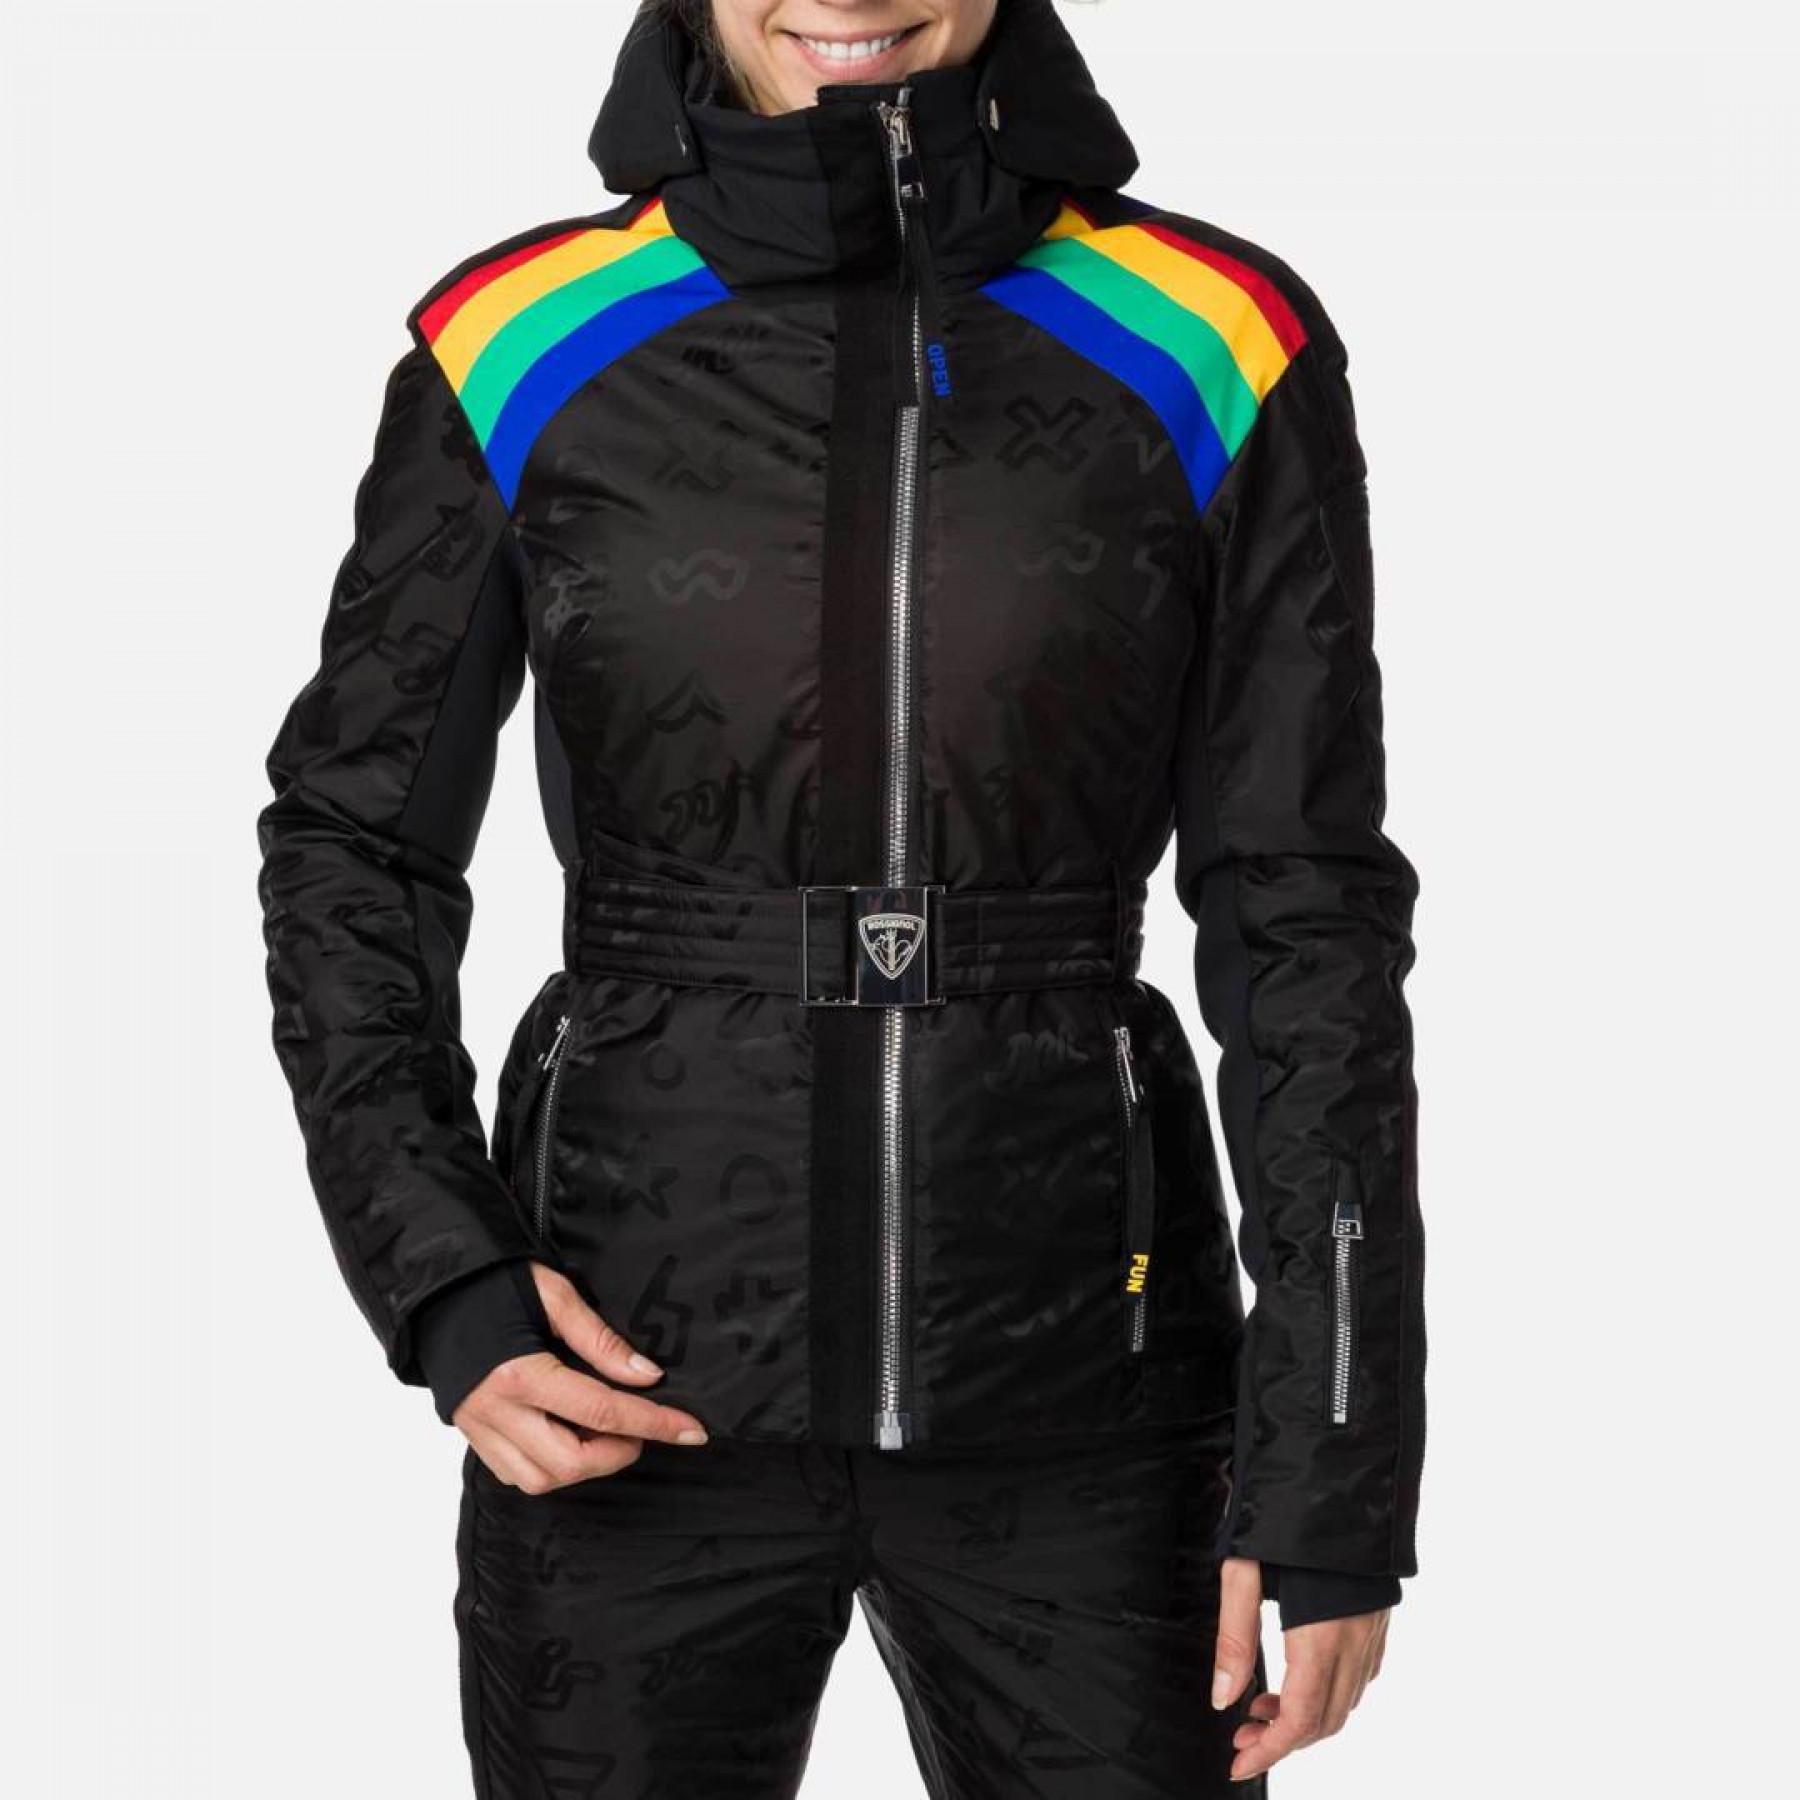 Women's ski jacket Rossignol Rainbow-ski